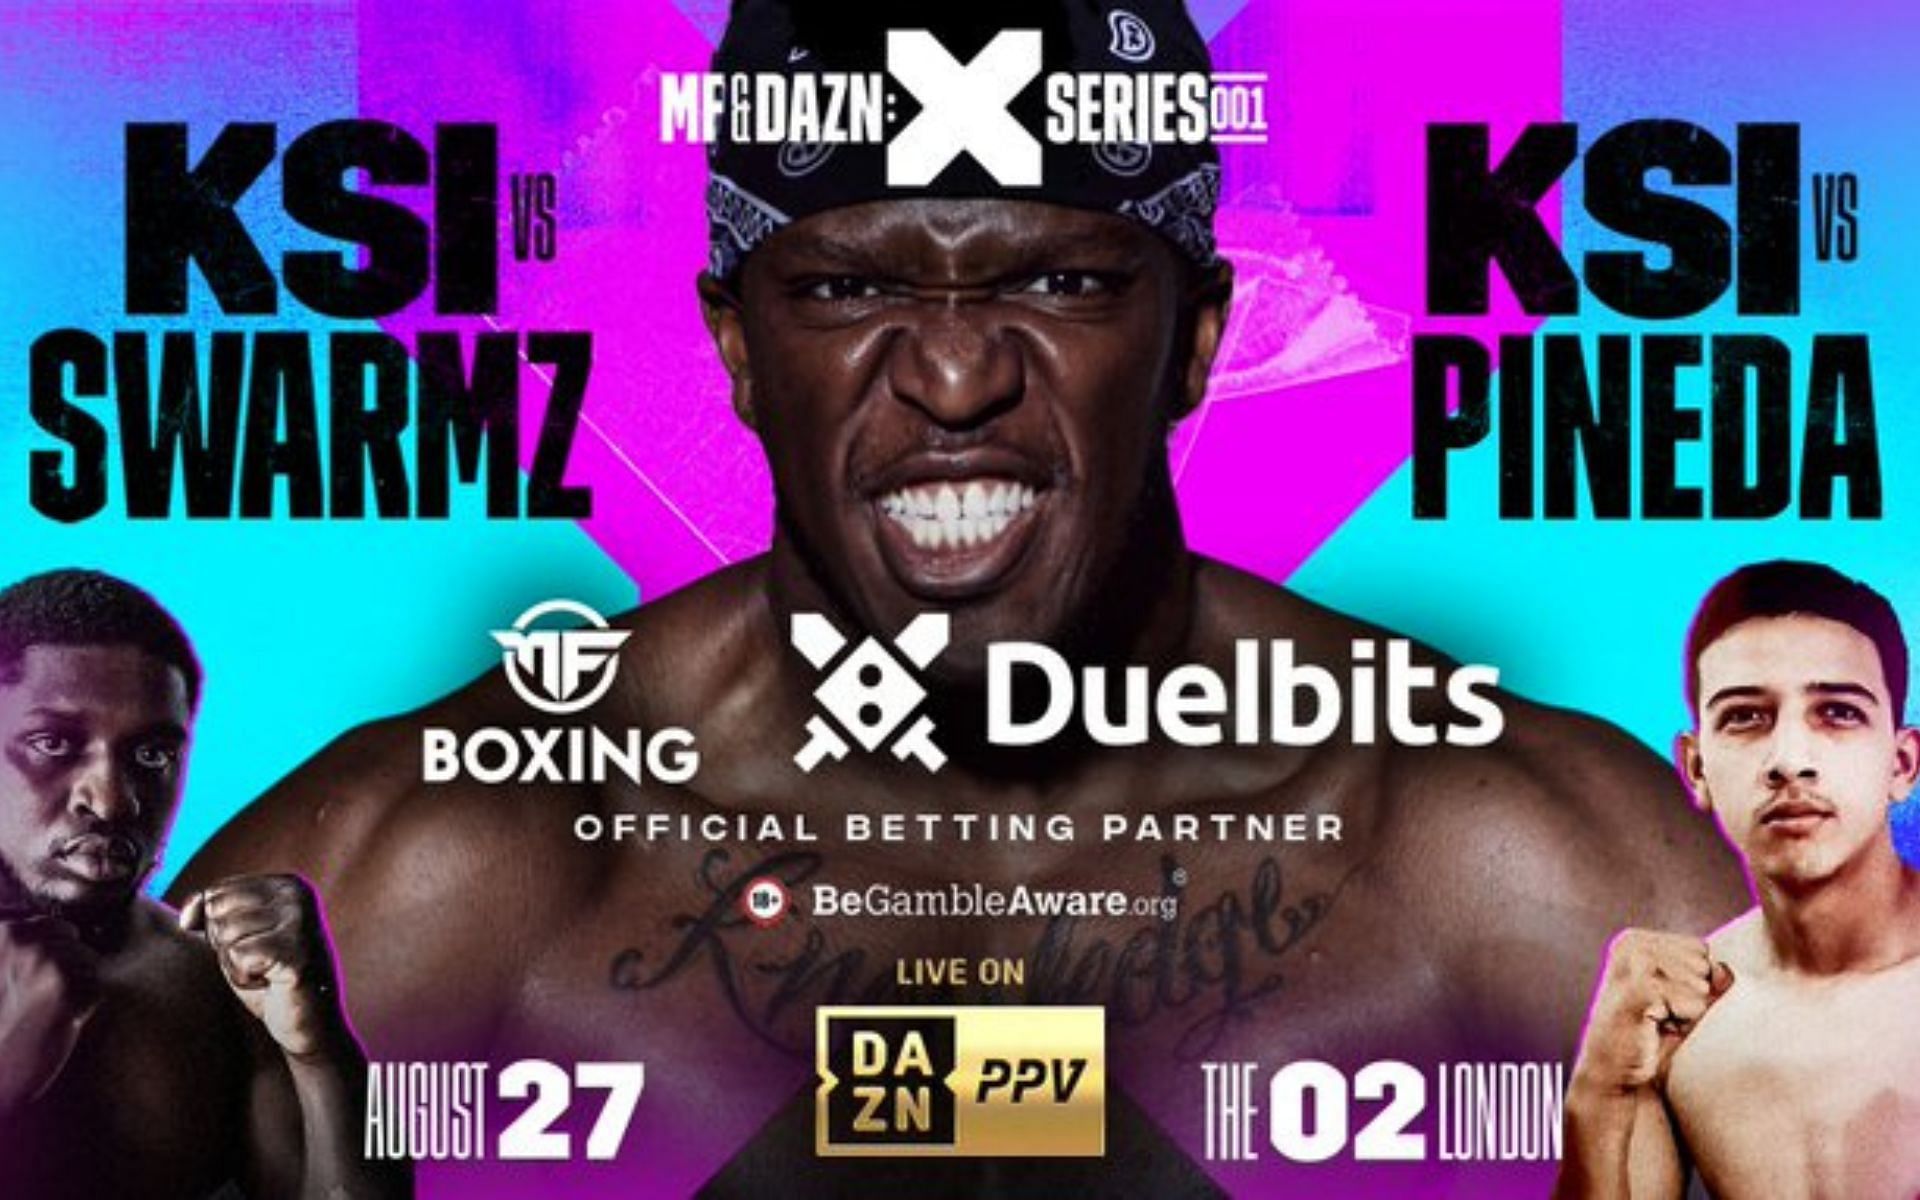 KSI vs. Swarmz and KSI vs. Luis Alcaraz Pineda fight poster (Image credits @duelbits on Twitter)